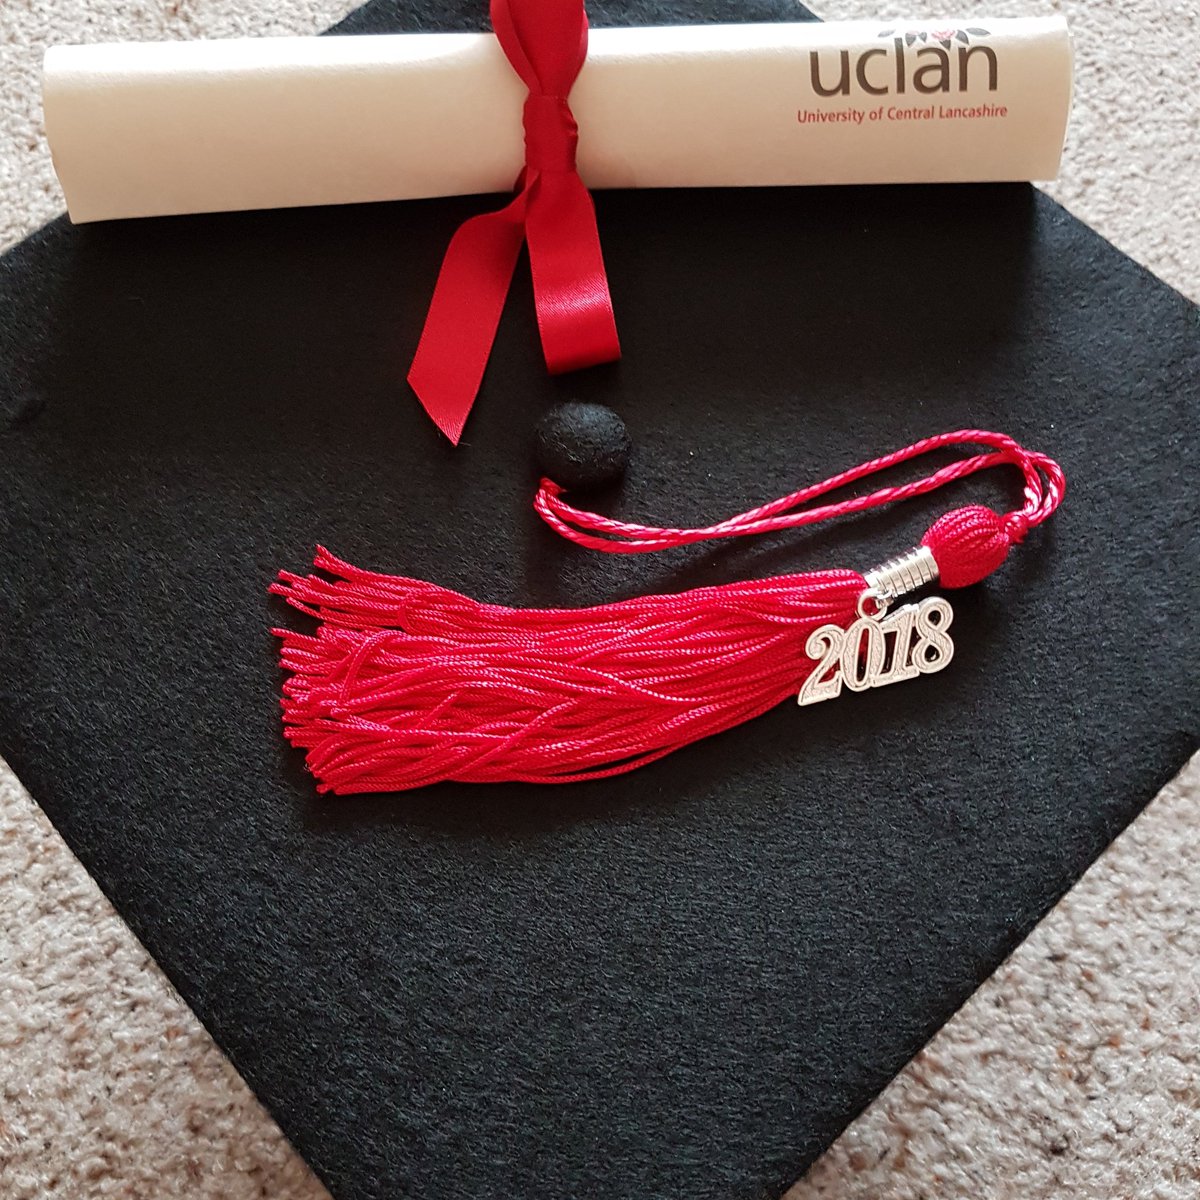 We did it 👩‍🎓🎓🎉 
 #graduation2018 #uclan #schoolofnursing #preston #guildhall